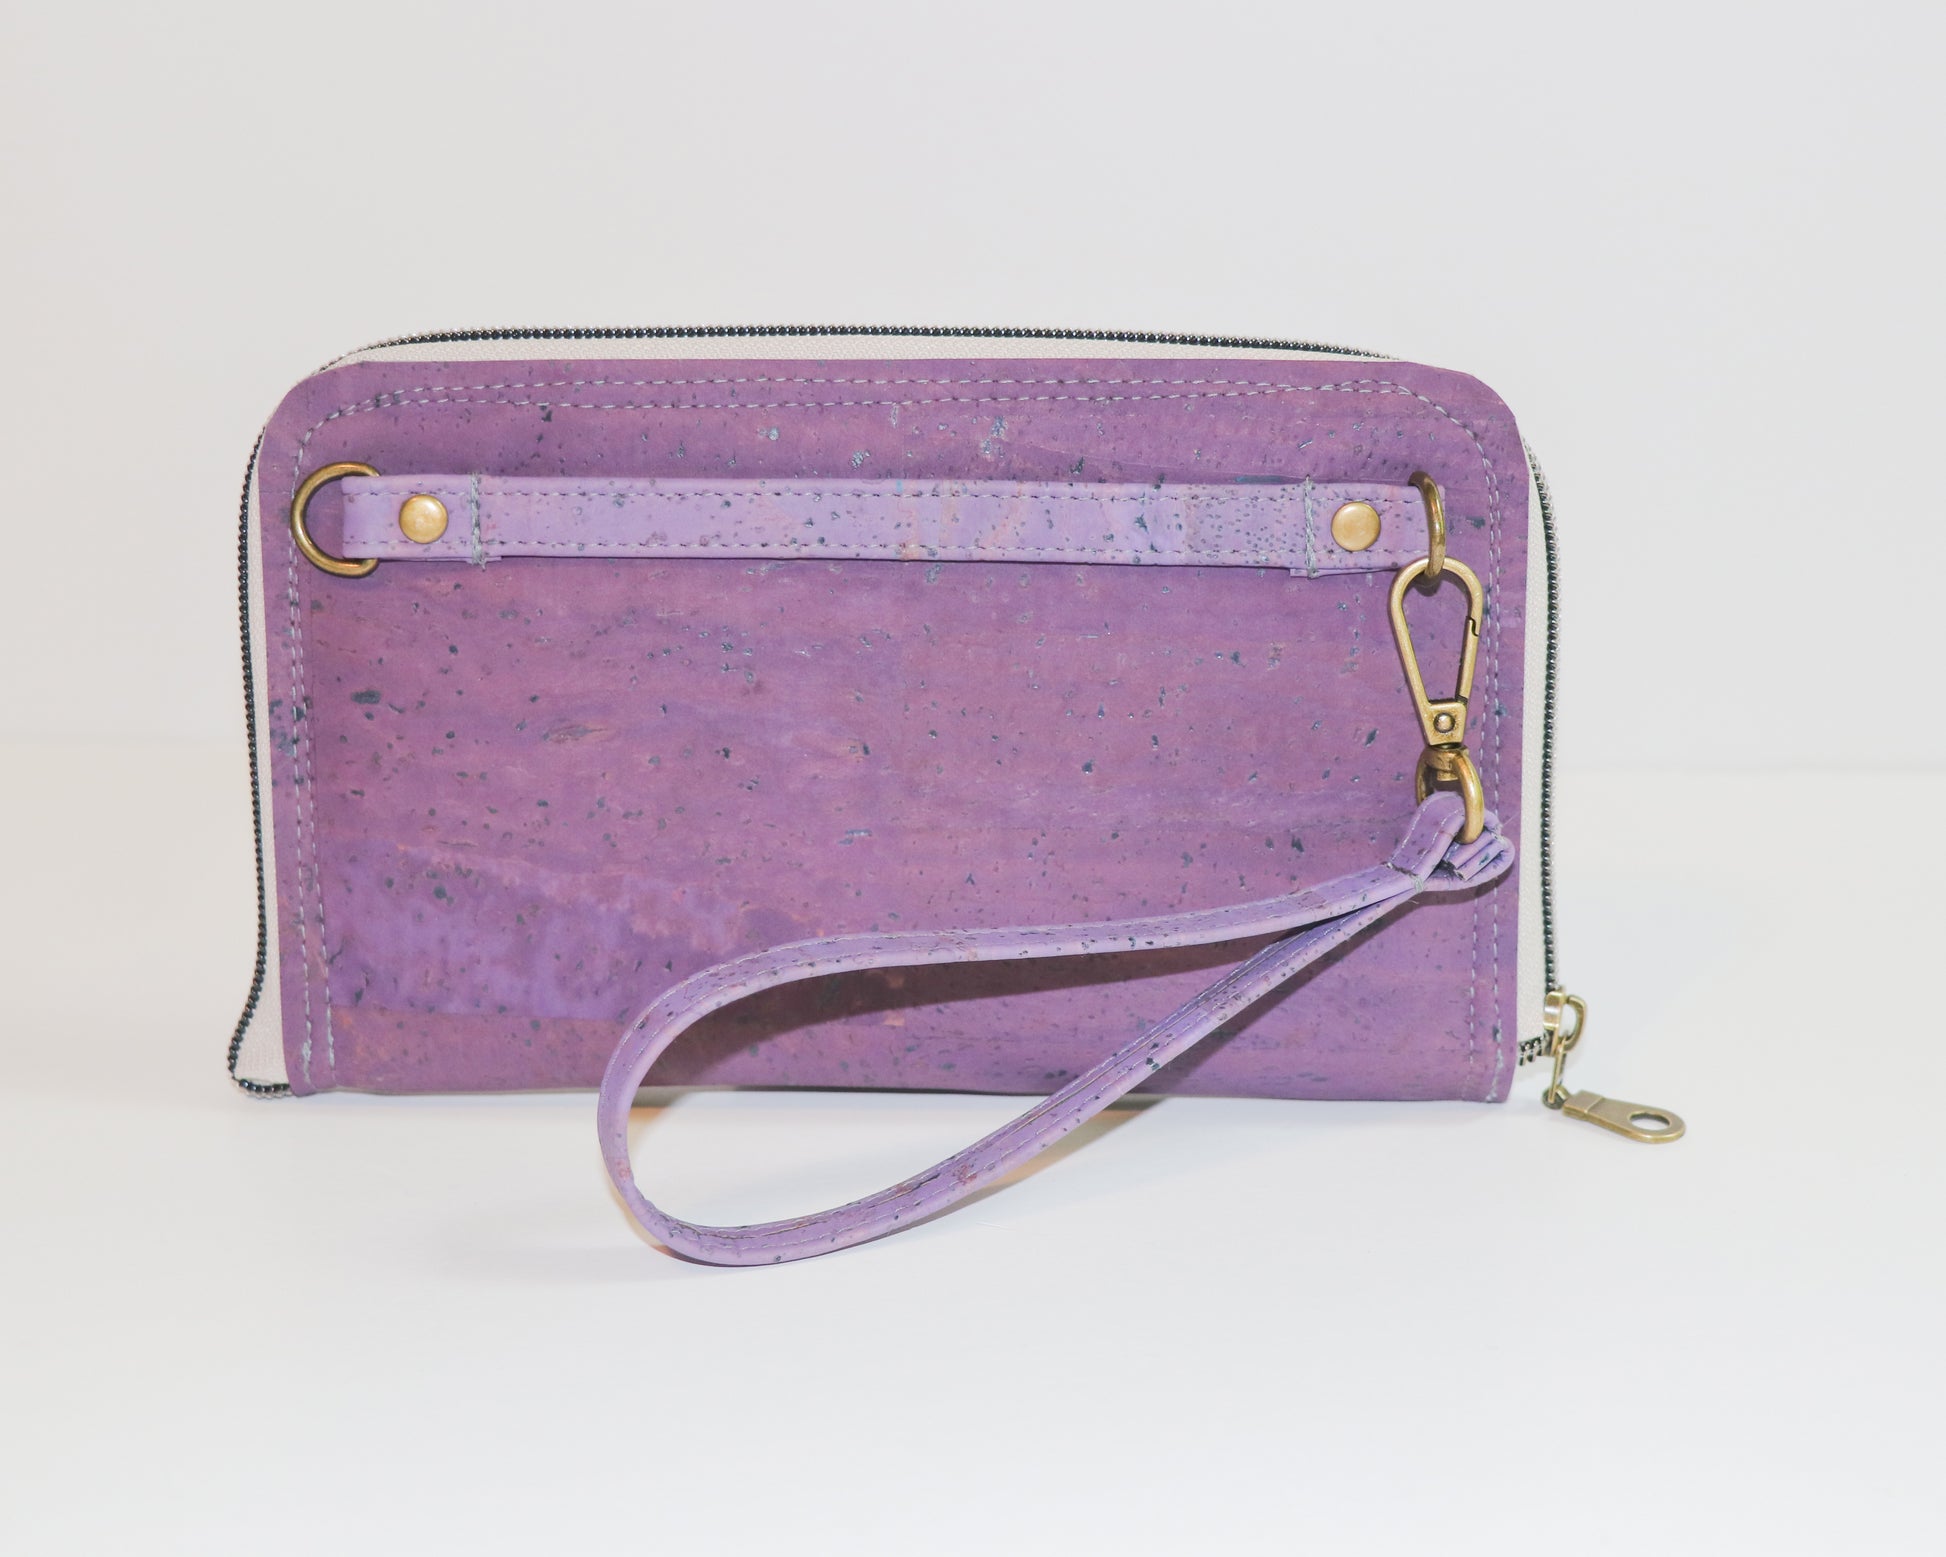 purple clutch wallet, back view with wristlet strap